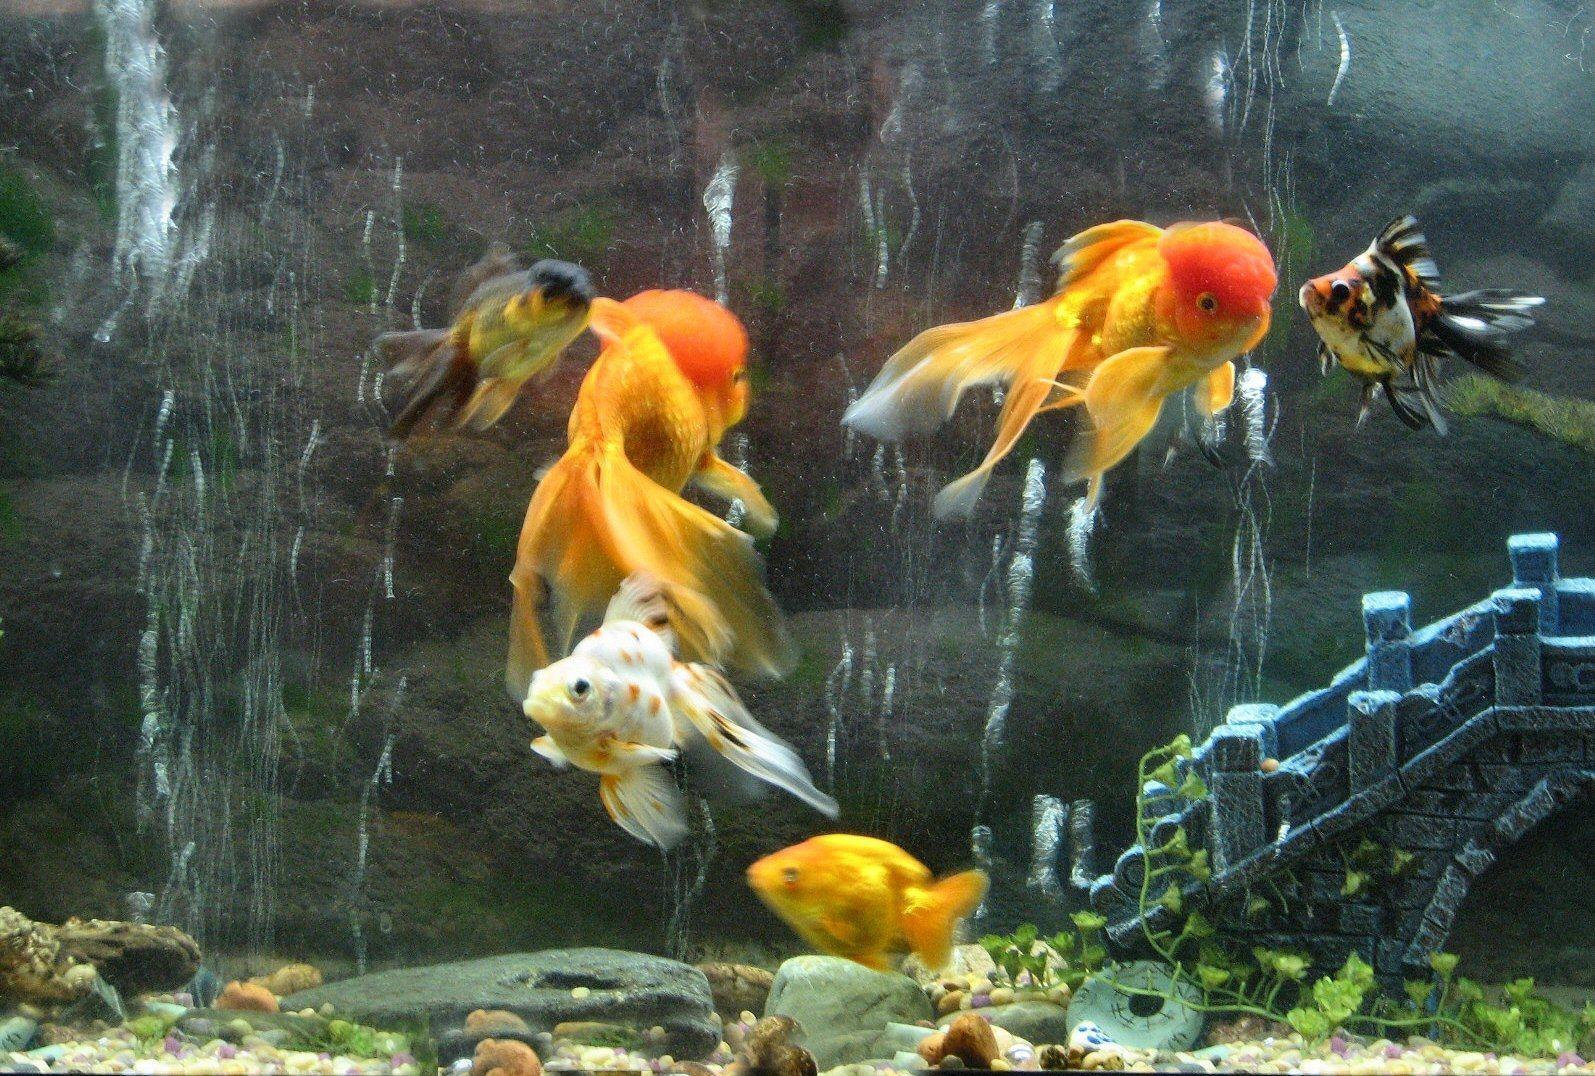 Fish Wallpaper HD